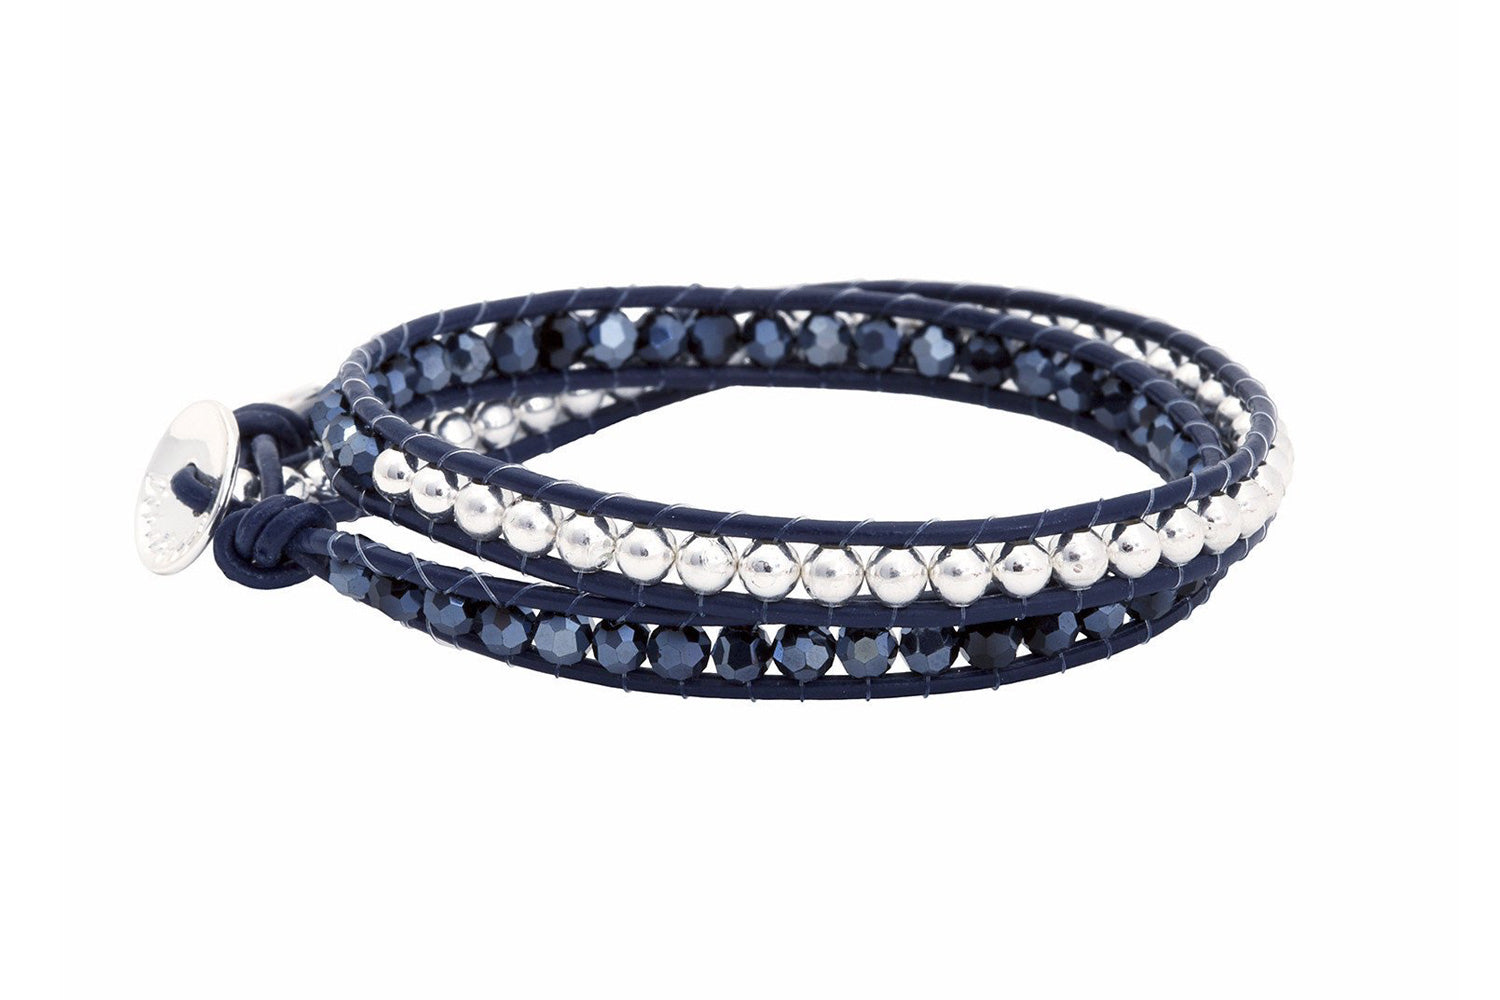 Swarovski 5043496 Women's Slake Deluxe Crystal Fabric Bracelet | eBay